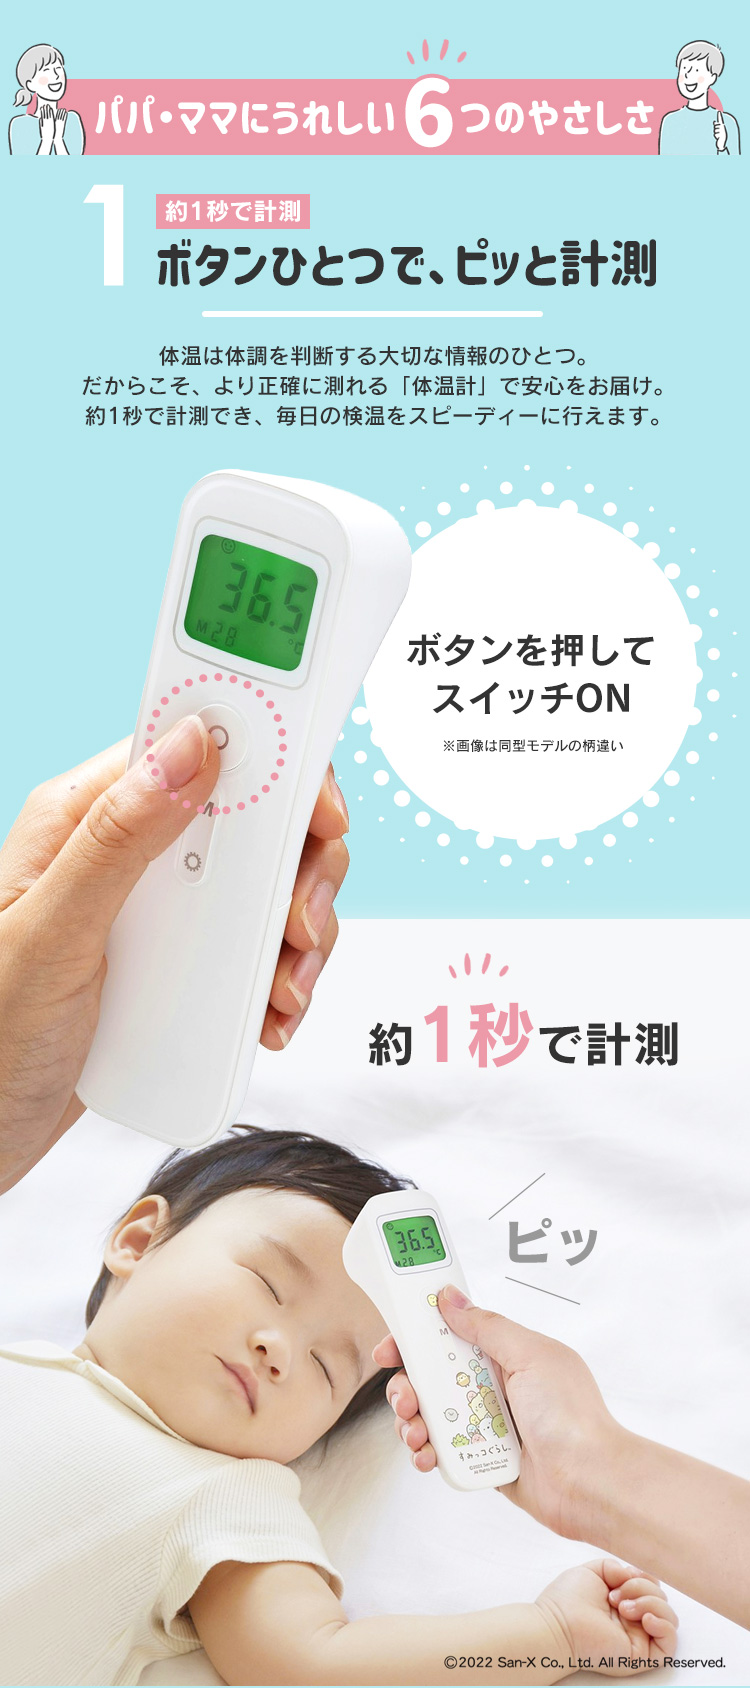 体温計 非接触型 非接触体温計 ピッと測る体温計 非接触型体温計 